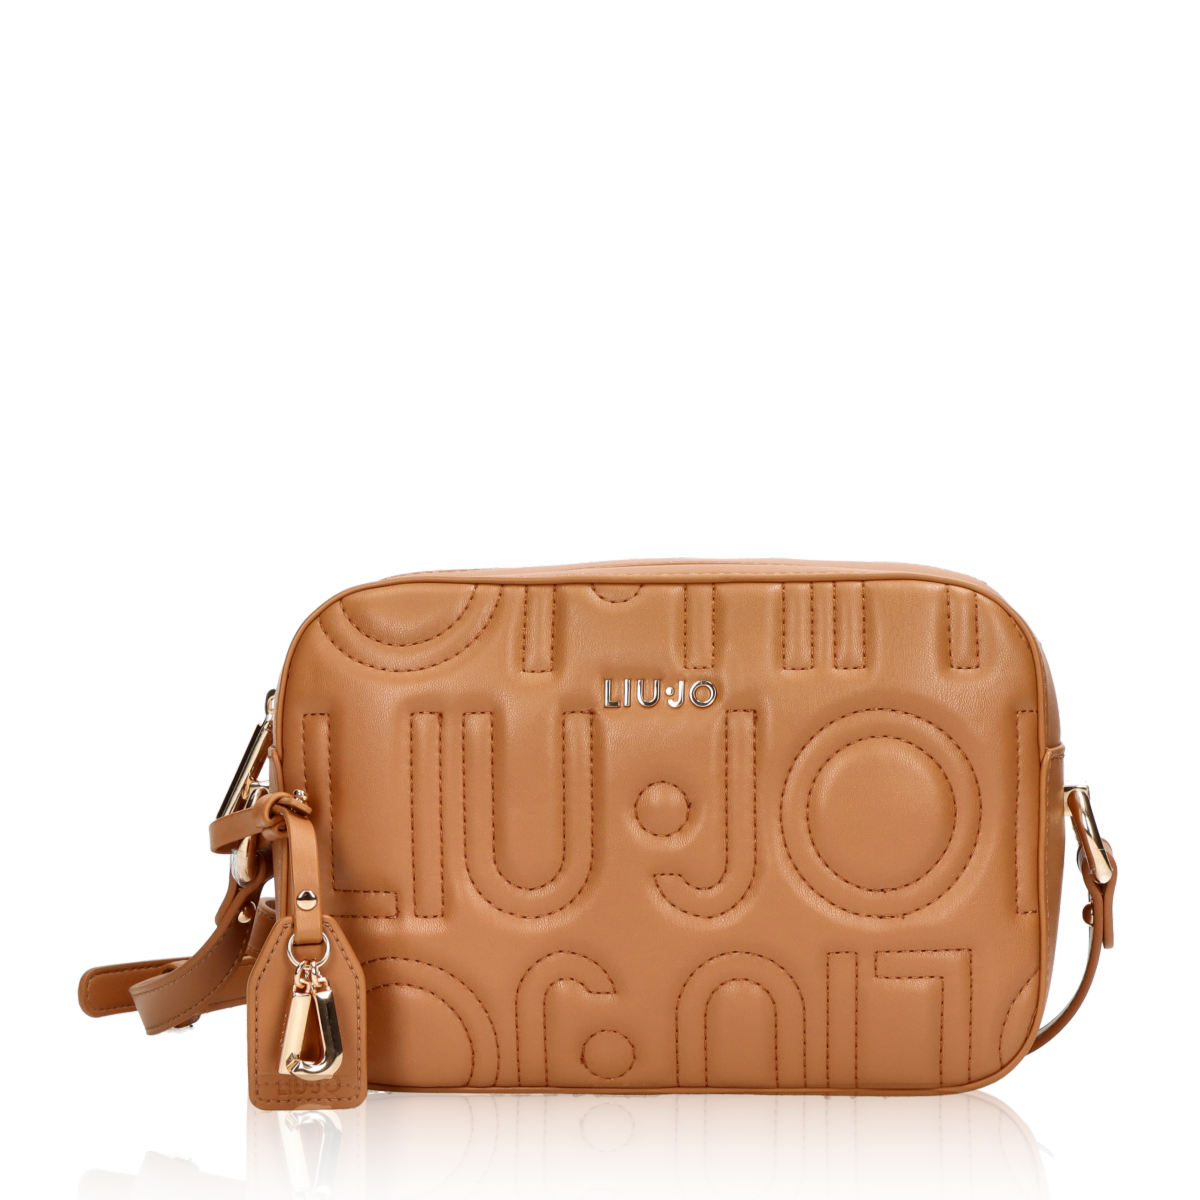 Liu Jo women's stylish bag - brown